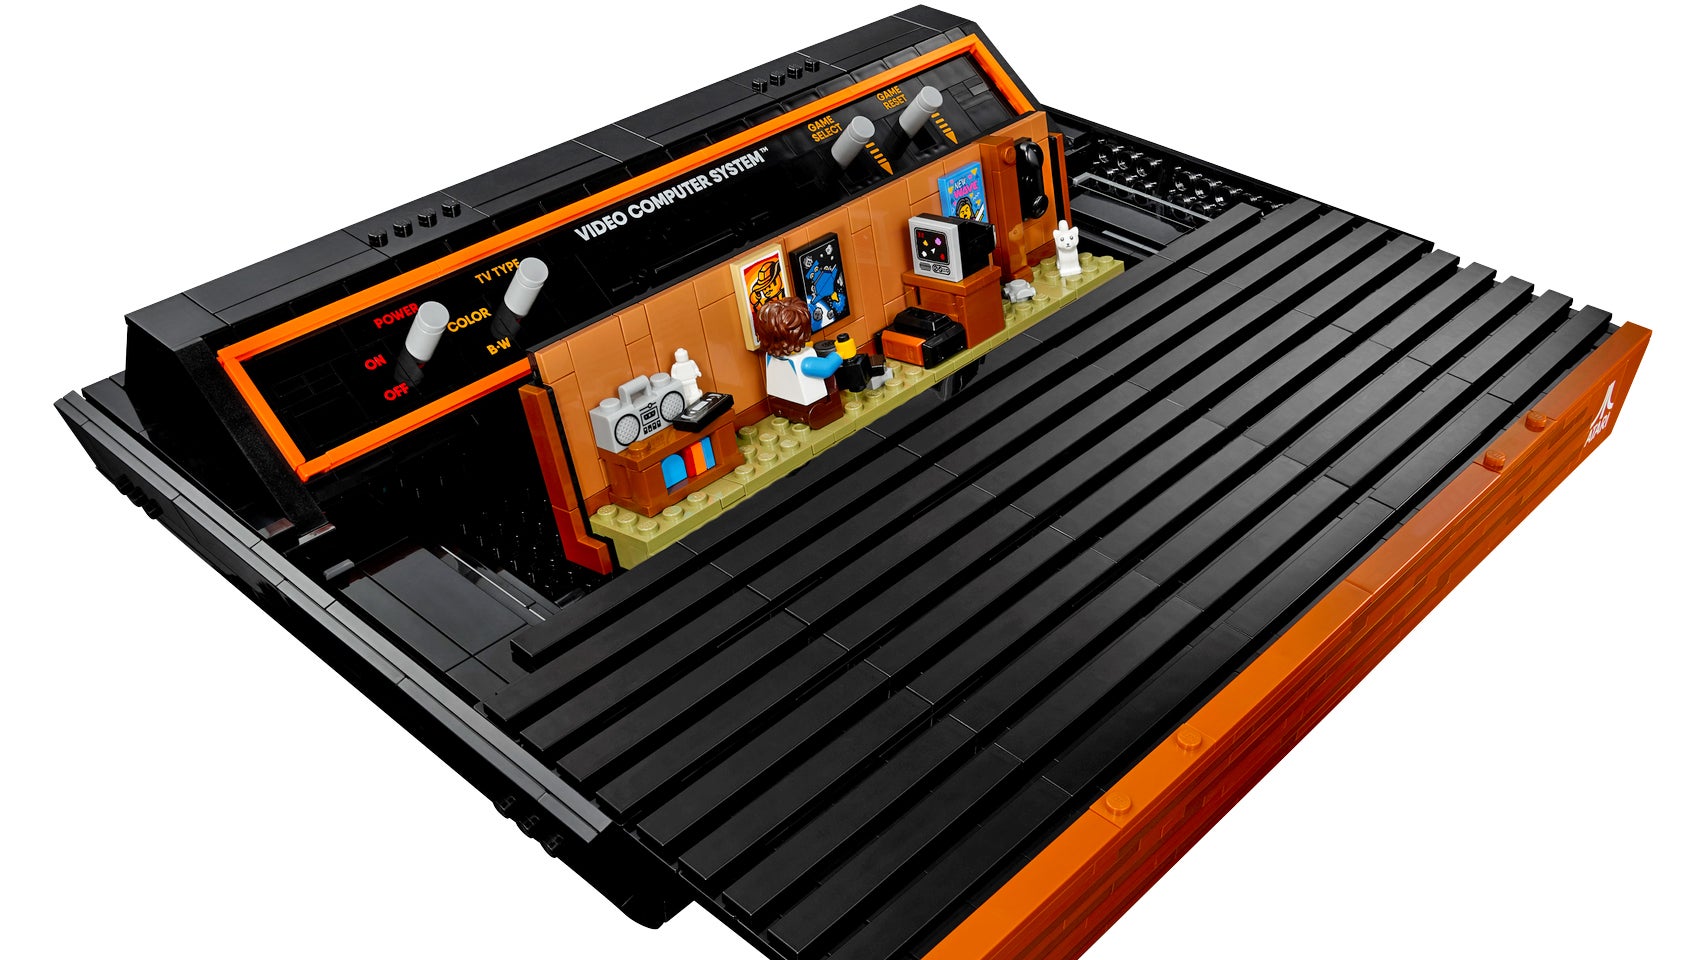 LEGO’s Atari 2600 Kit Celebrates Game Company’s 50th Anniversary